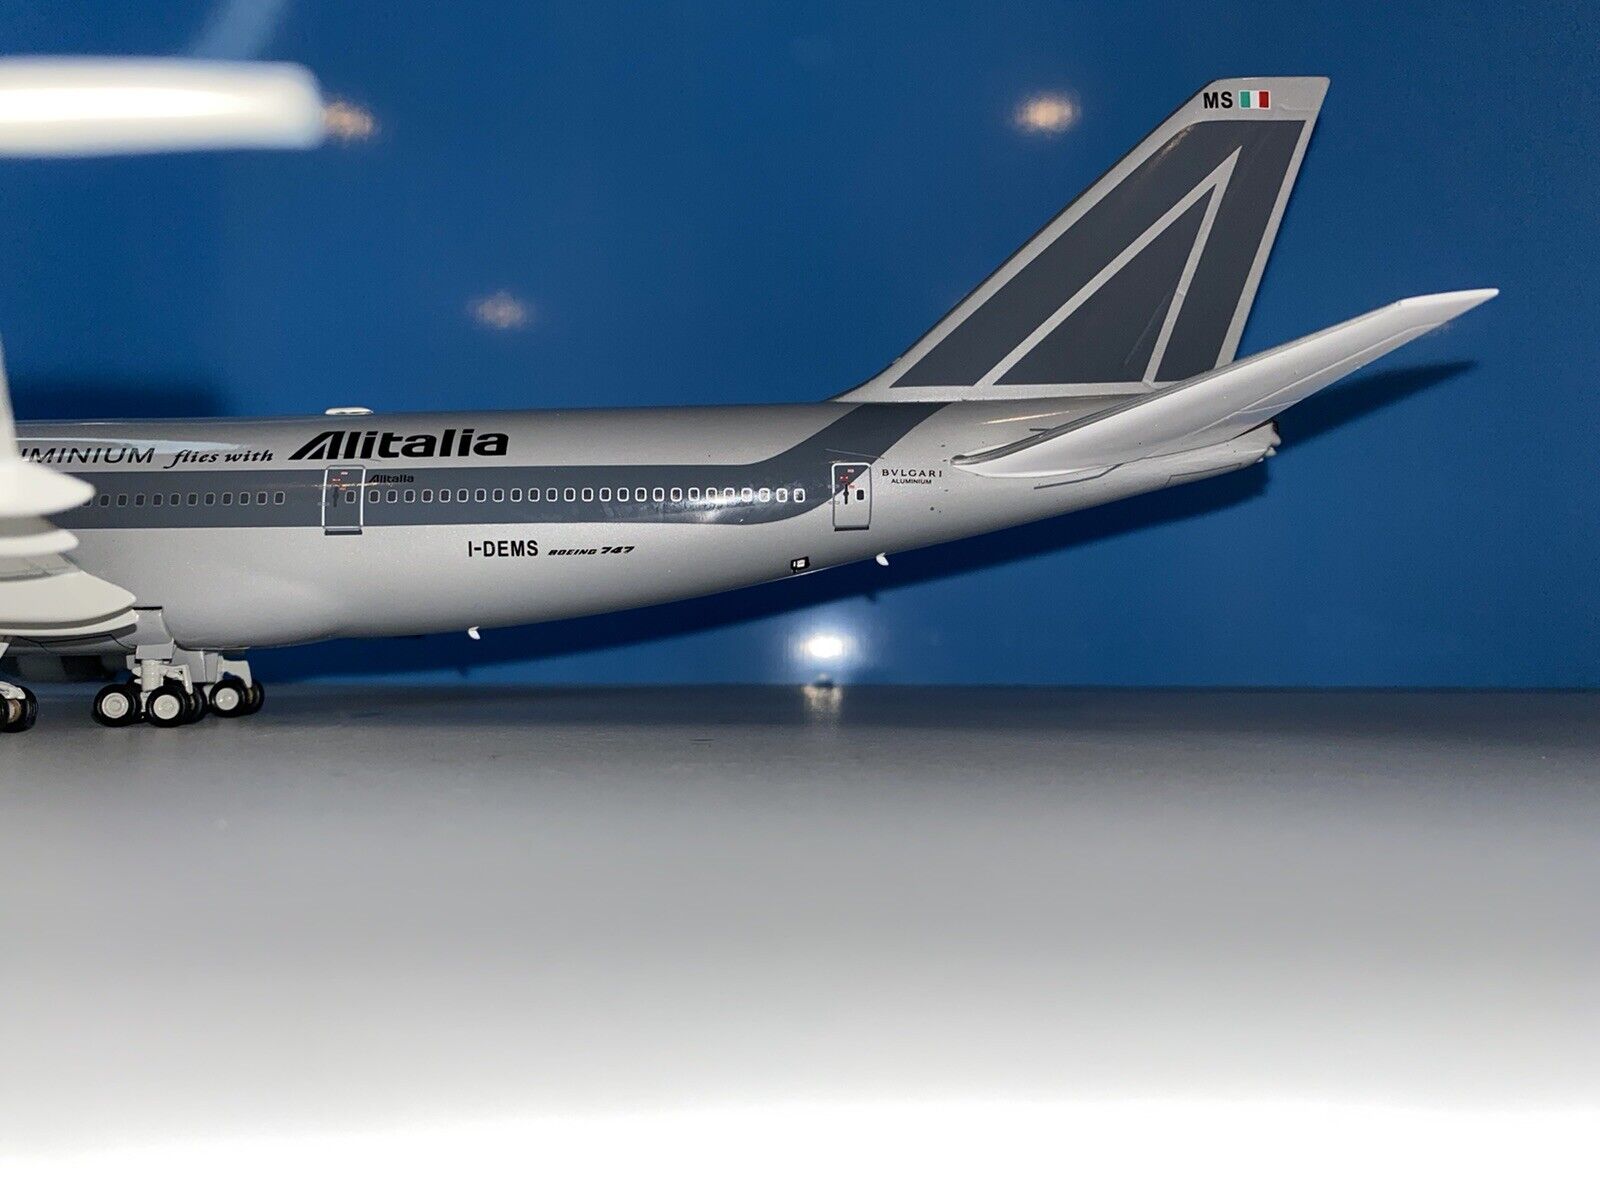 Alitalia “Bvlgari” Boeing 747-200 I-DEMS Inflight 1/200